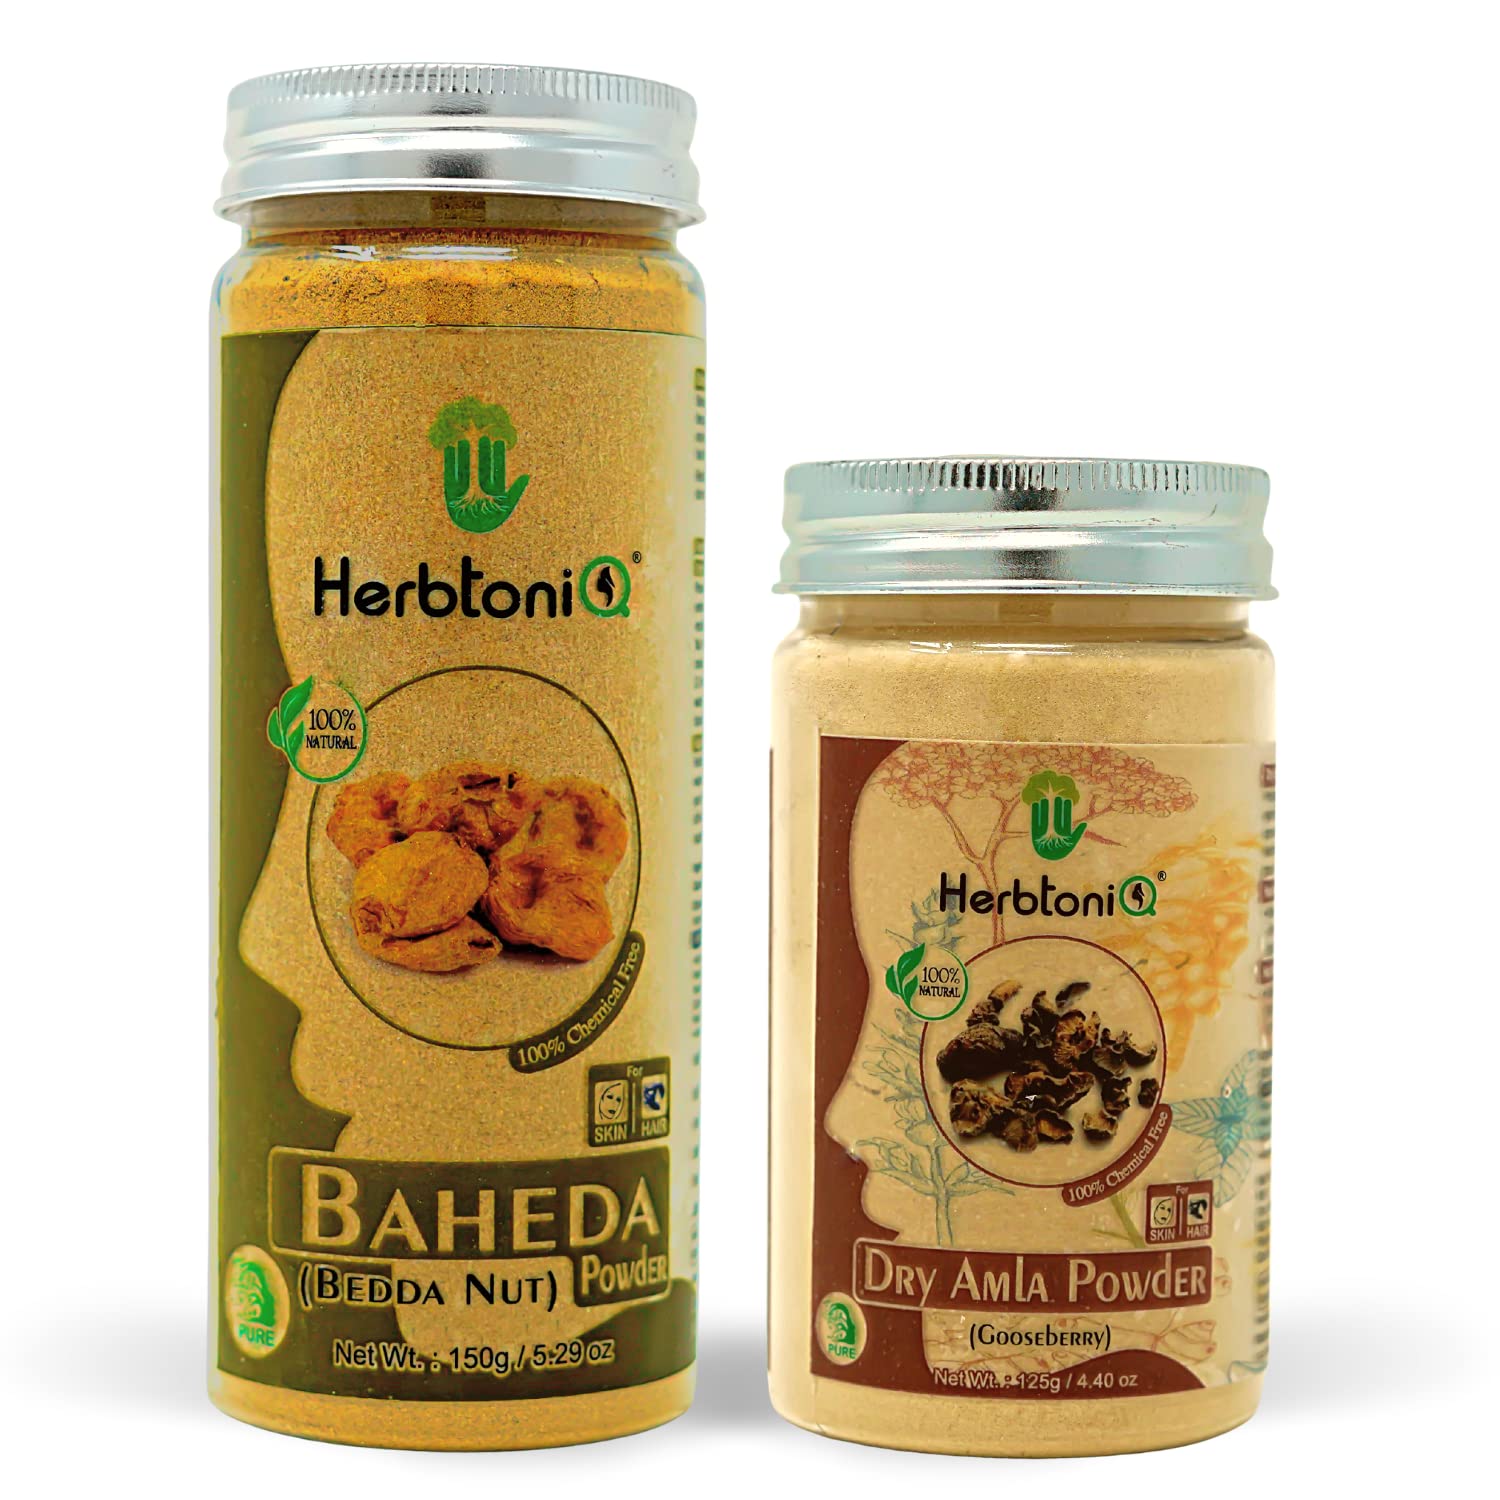 HerbtoniQ 100% Natural Jatamansi and Baheda Powder for Dandruff, Frizzy Hair,  Damaged Hair, Intensive Hair Care Pack (300 Gram) ▻ HerbtoniQ